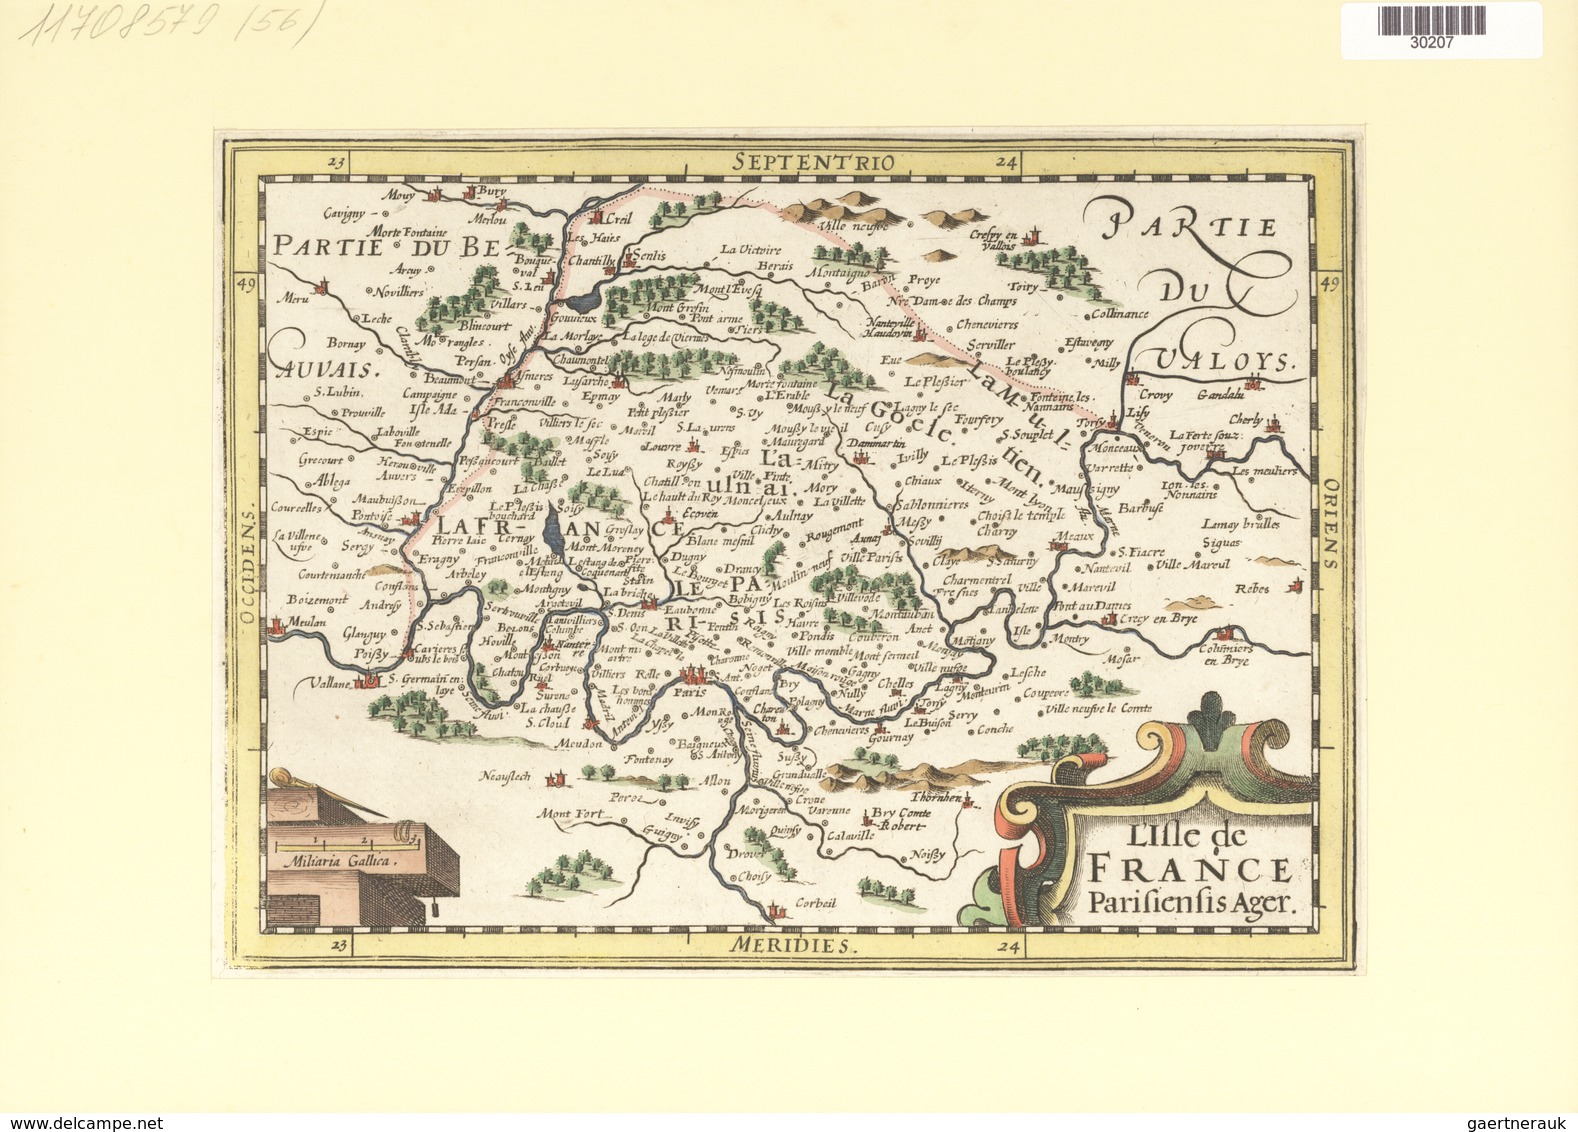 Landkarten Und Stiche: 1734. L'Isle De France/ Parisiensis Ager. Map Of The Region Of France Around - Geography